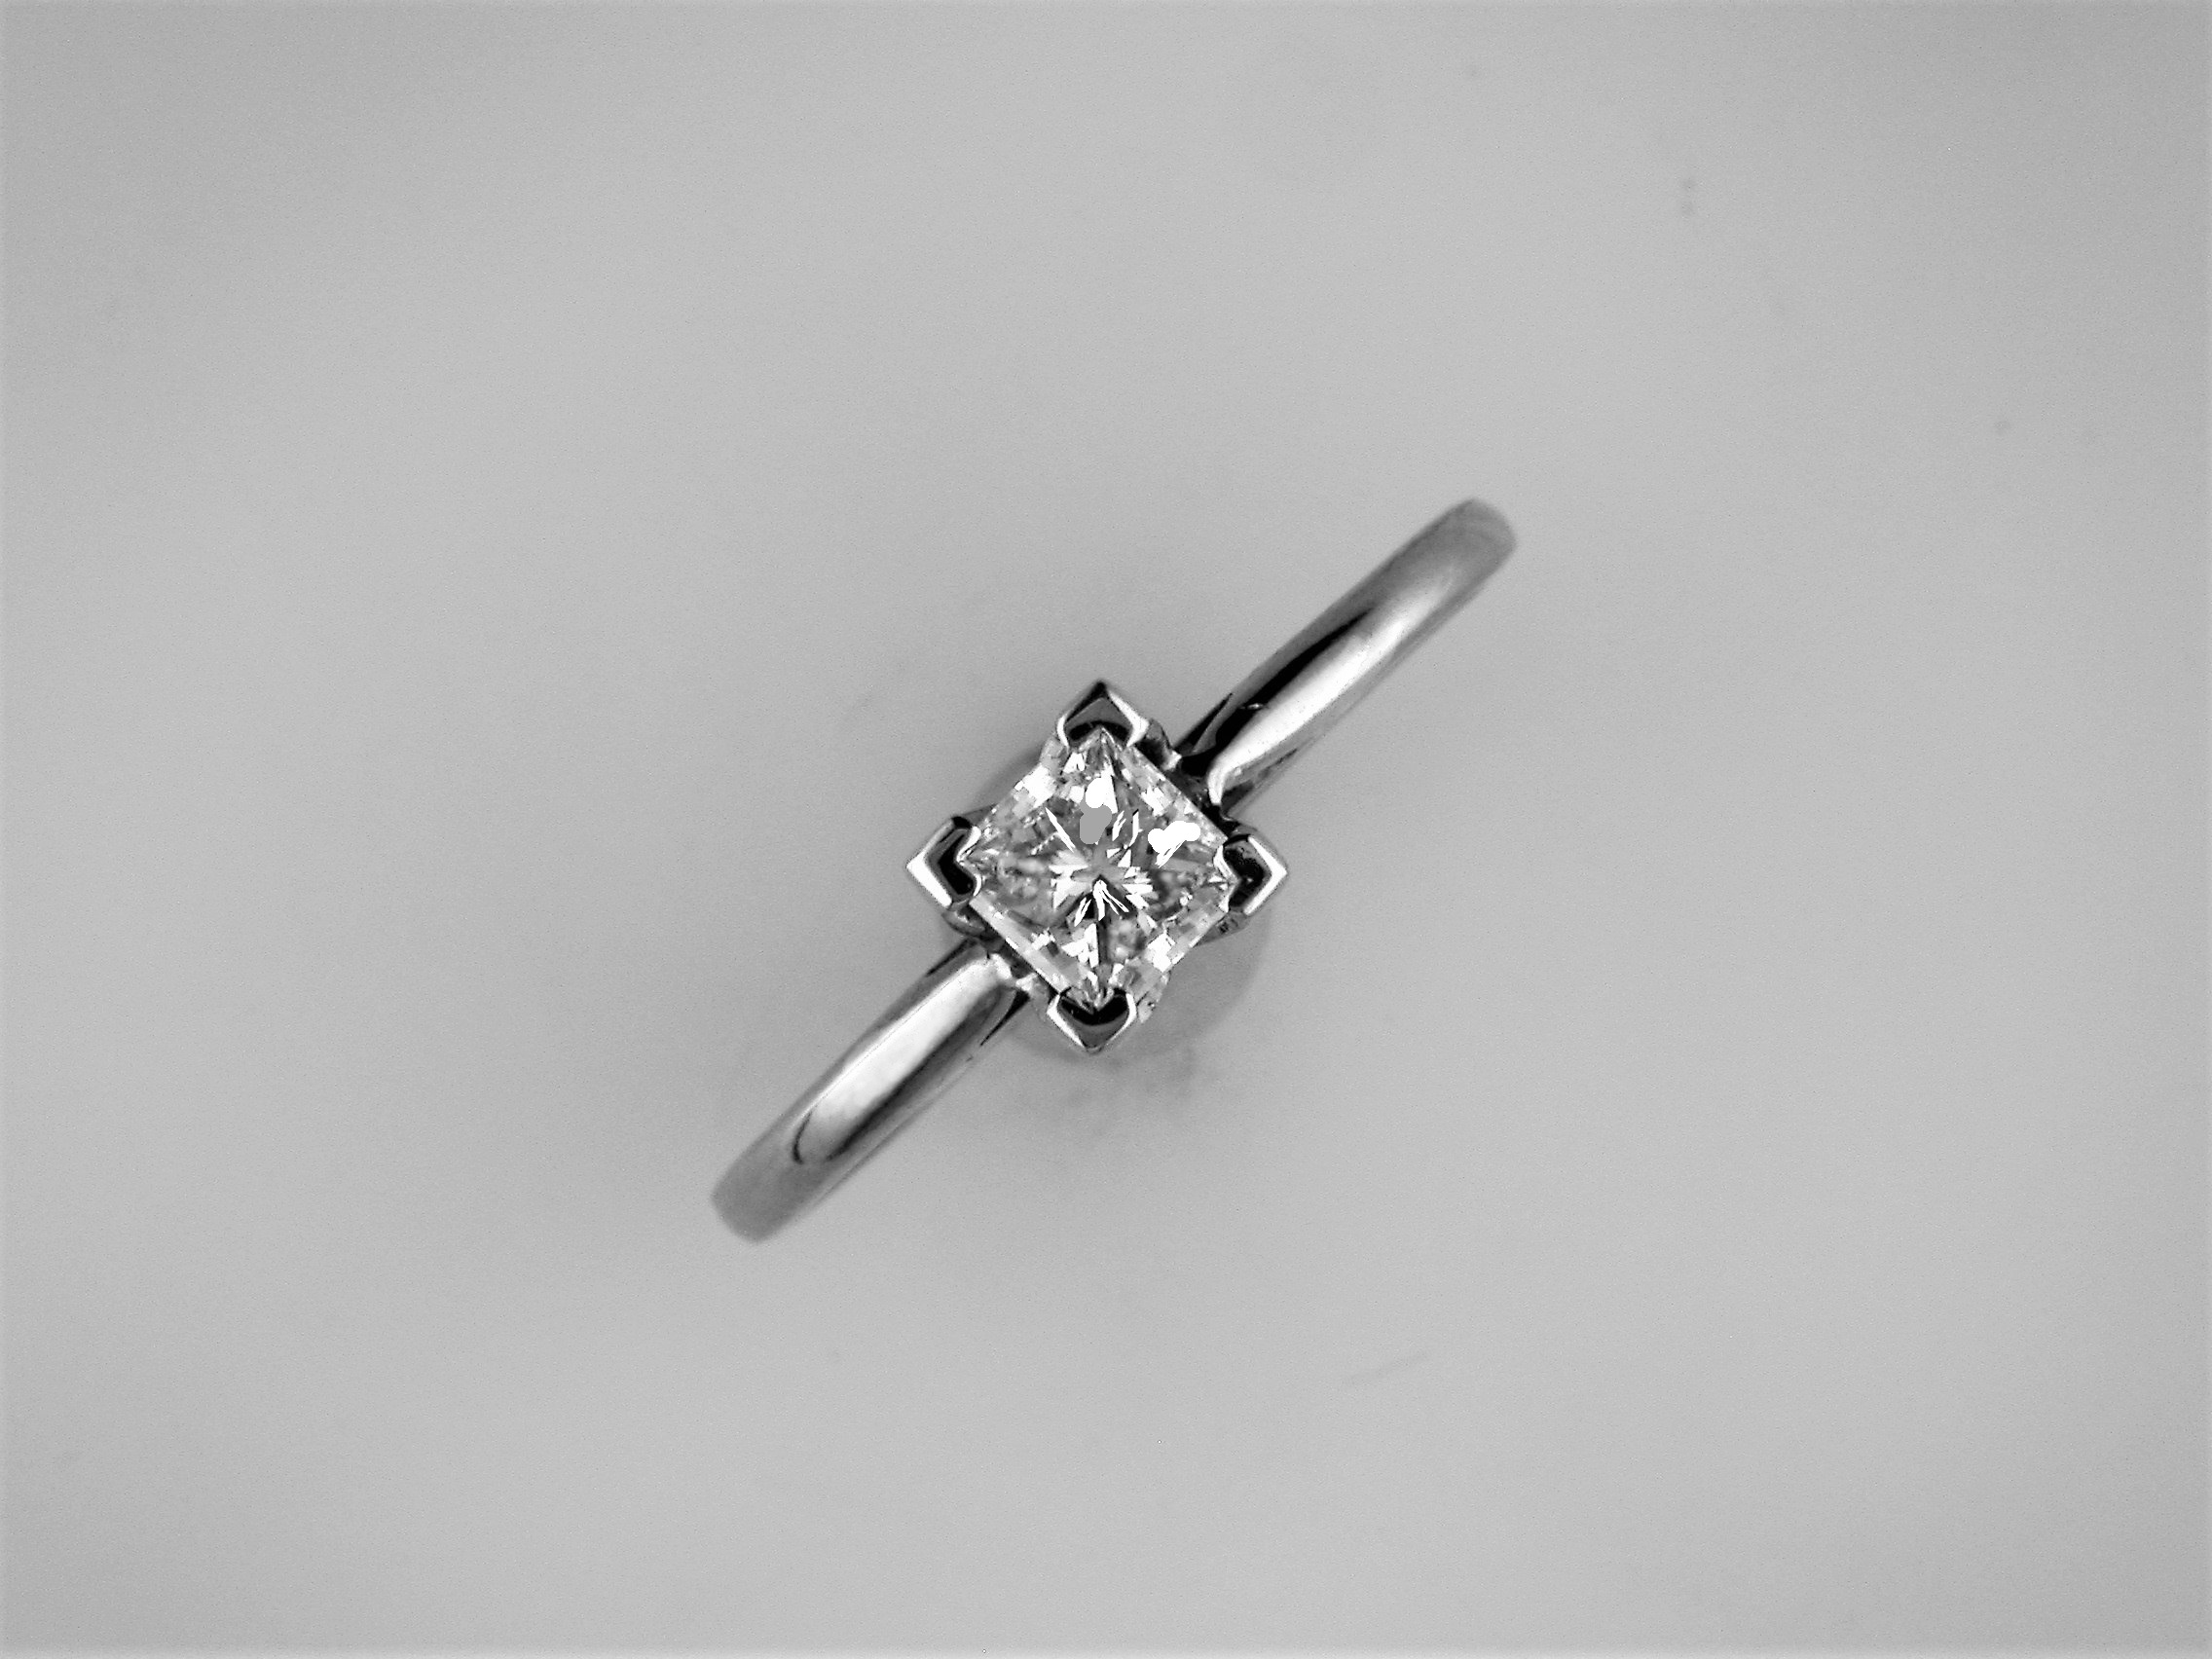 A New 0.51 Carat Princess Cut Diamond Ring - Image 2 of 4